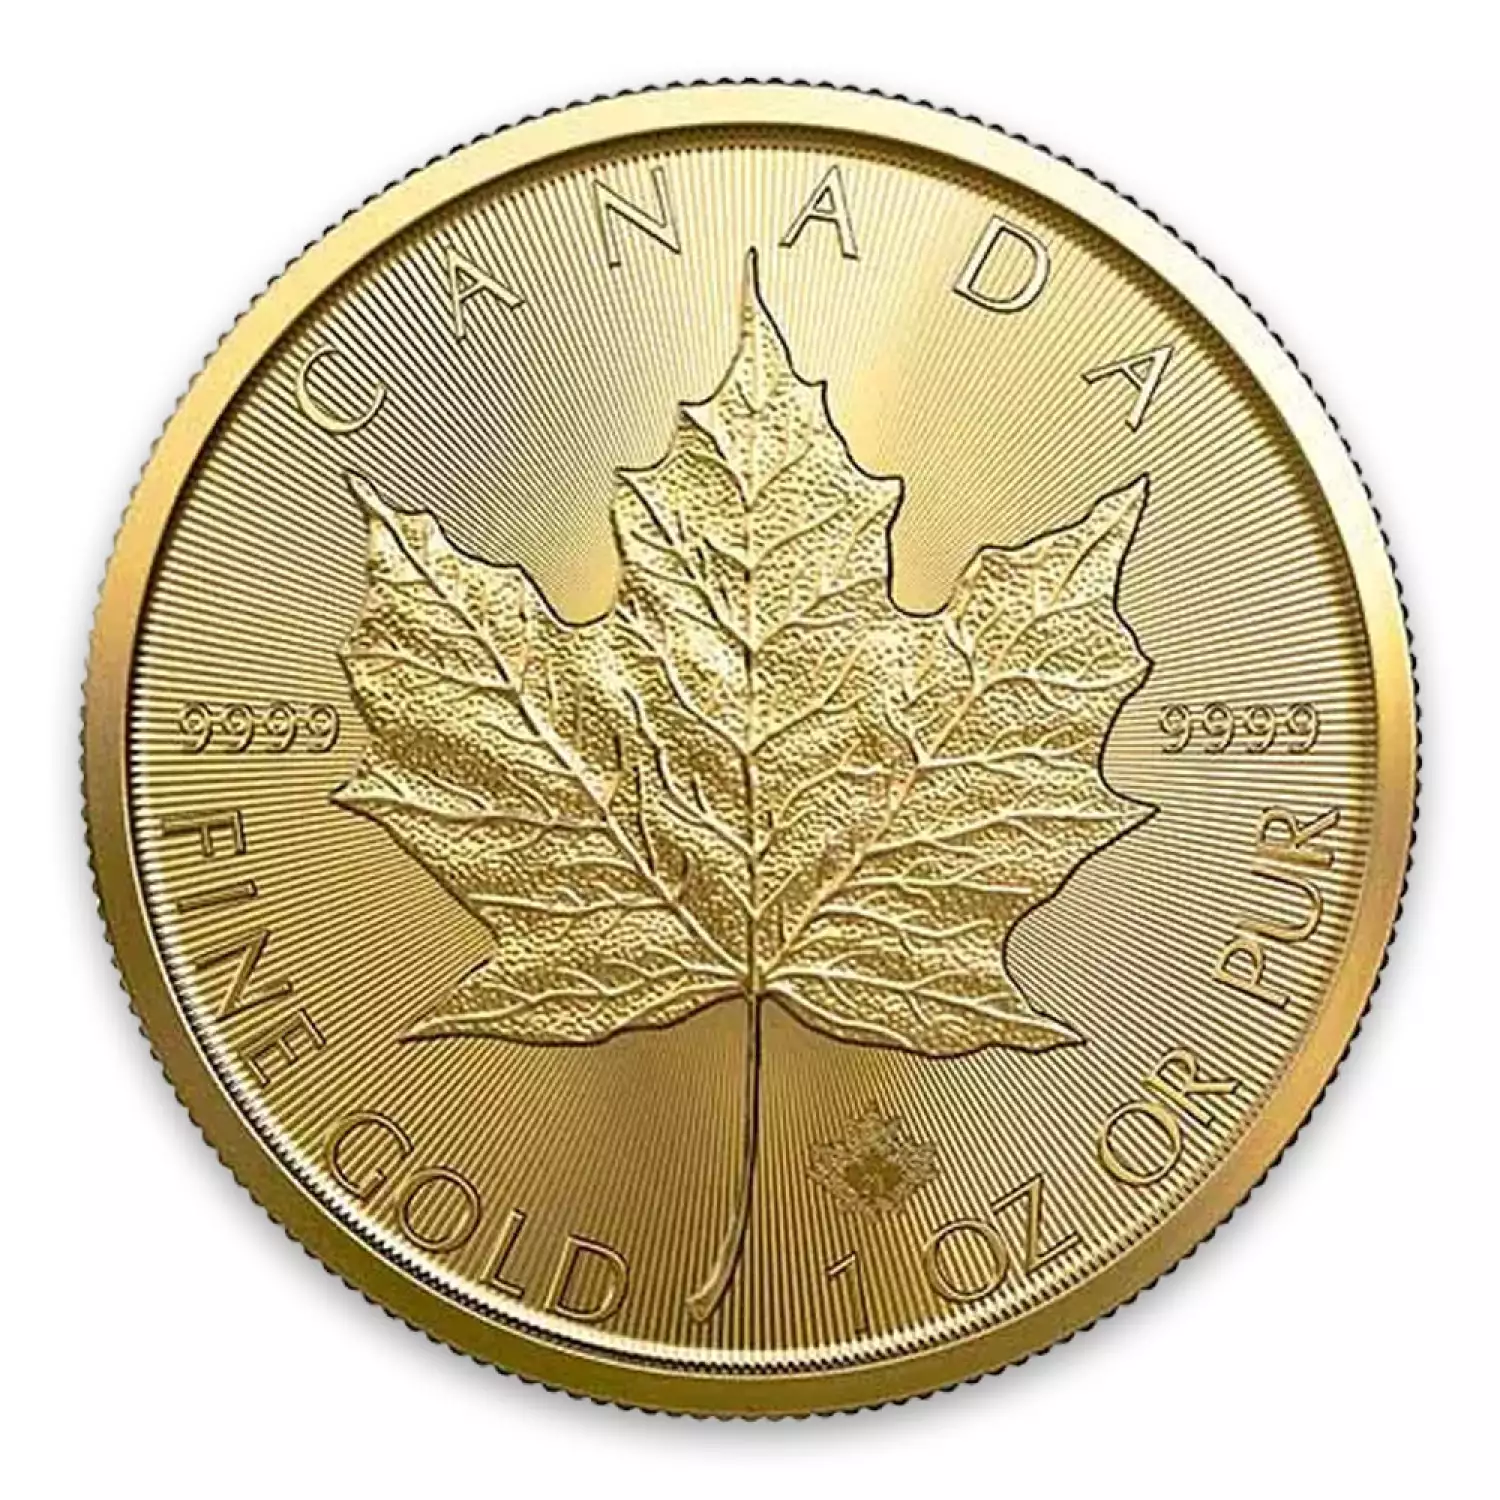 2021 1oz Canadian Gold Maple Leaf